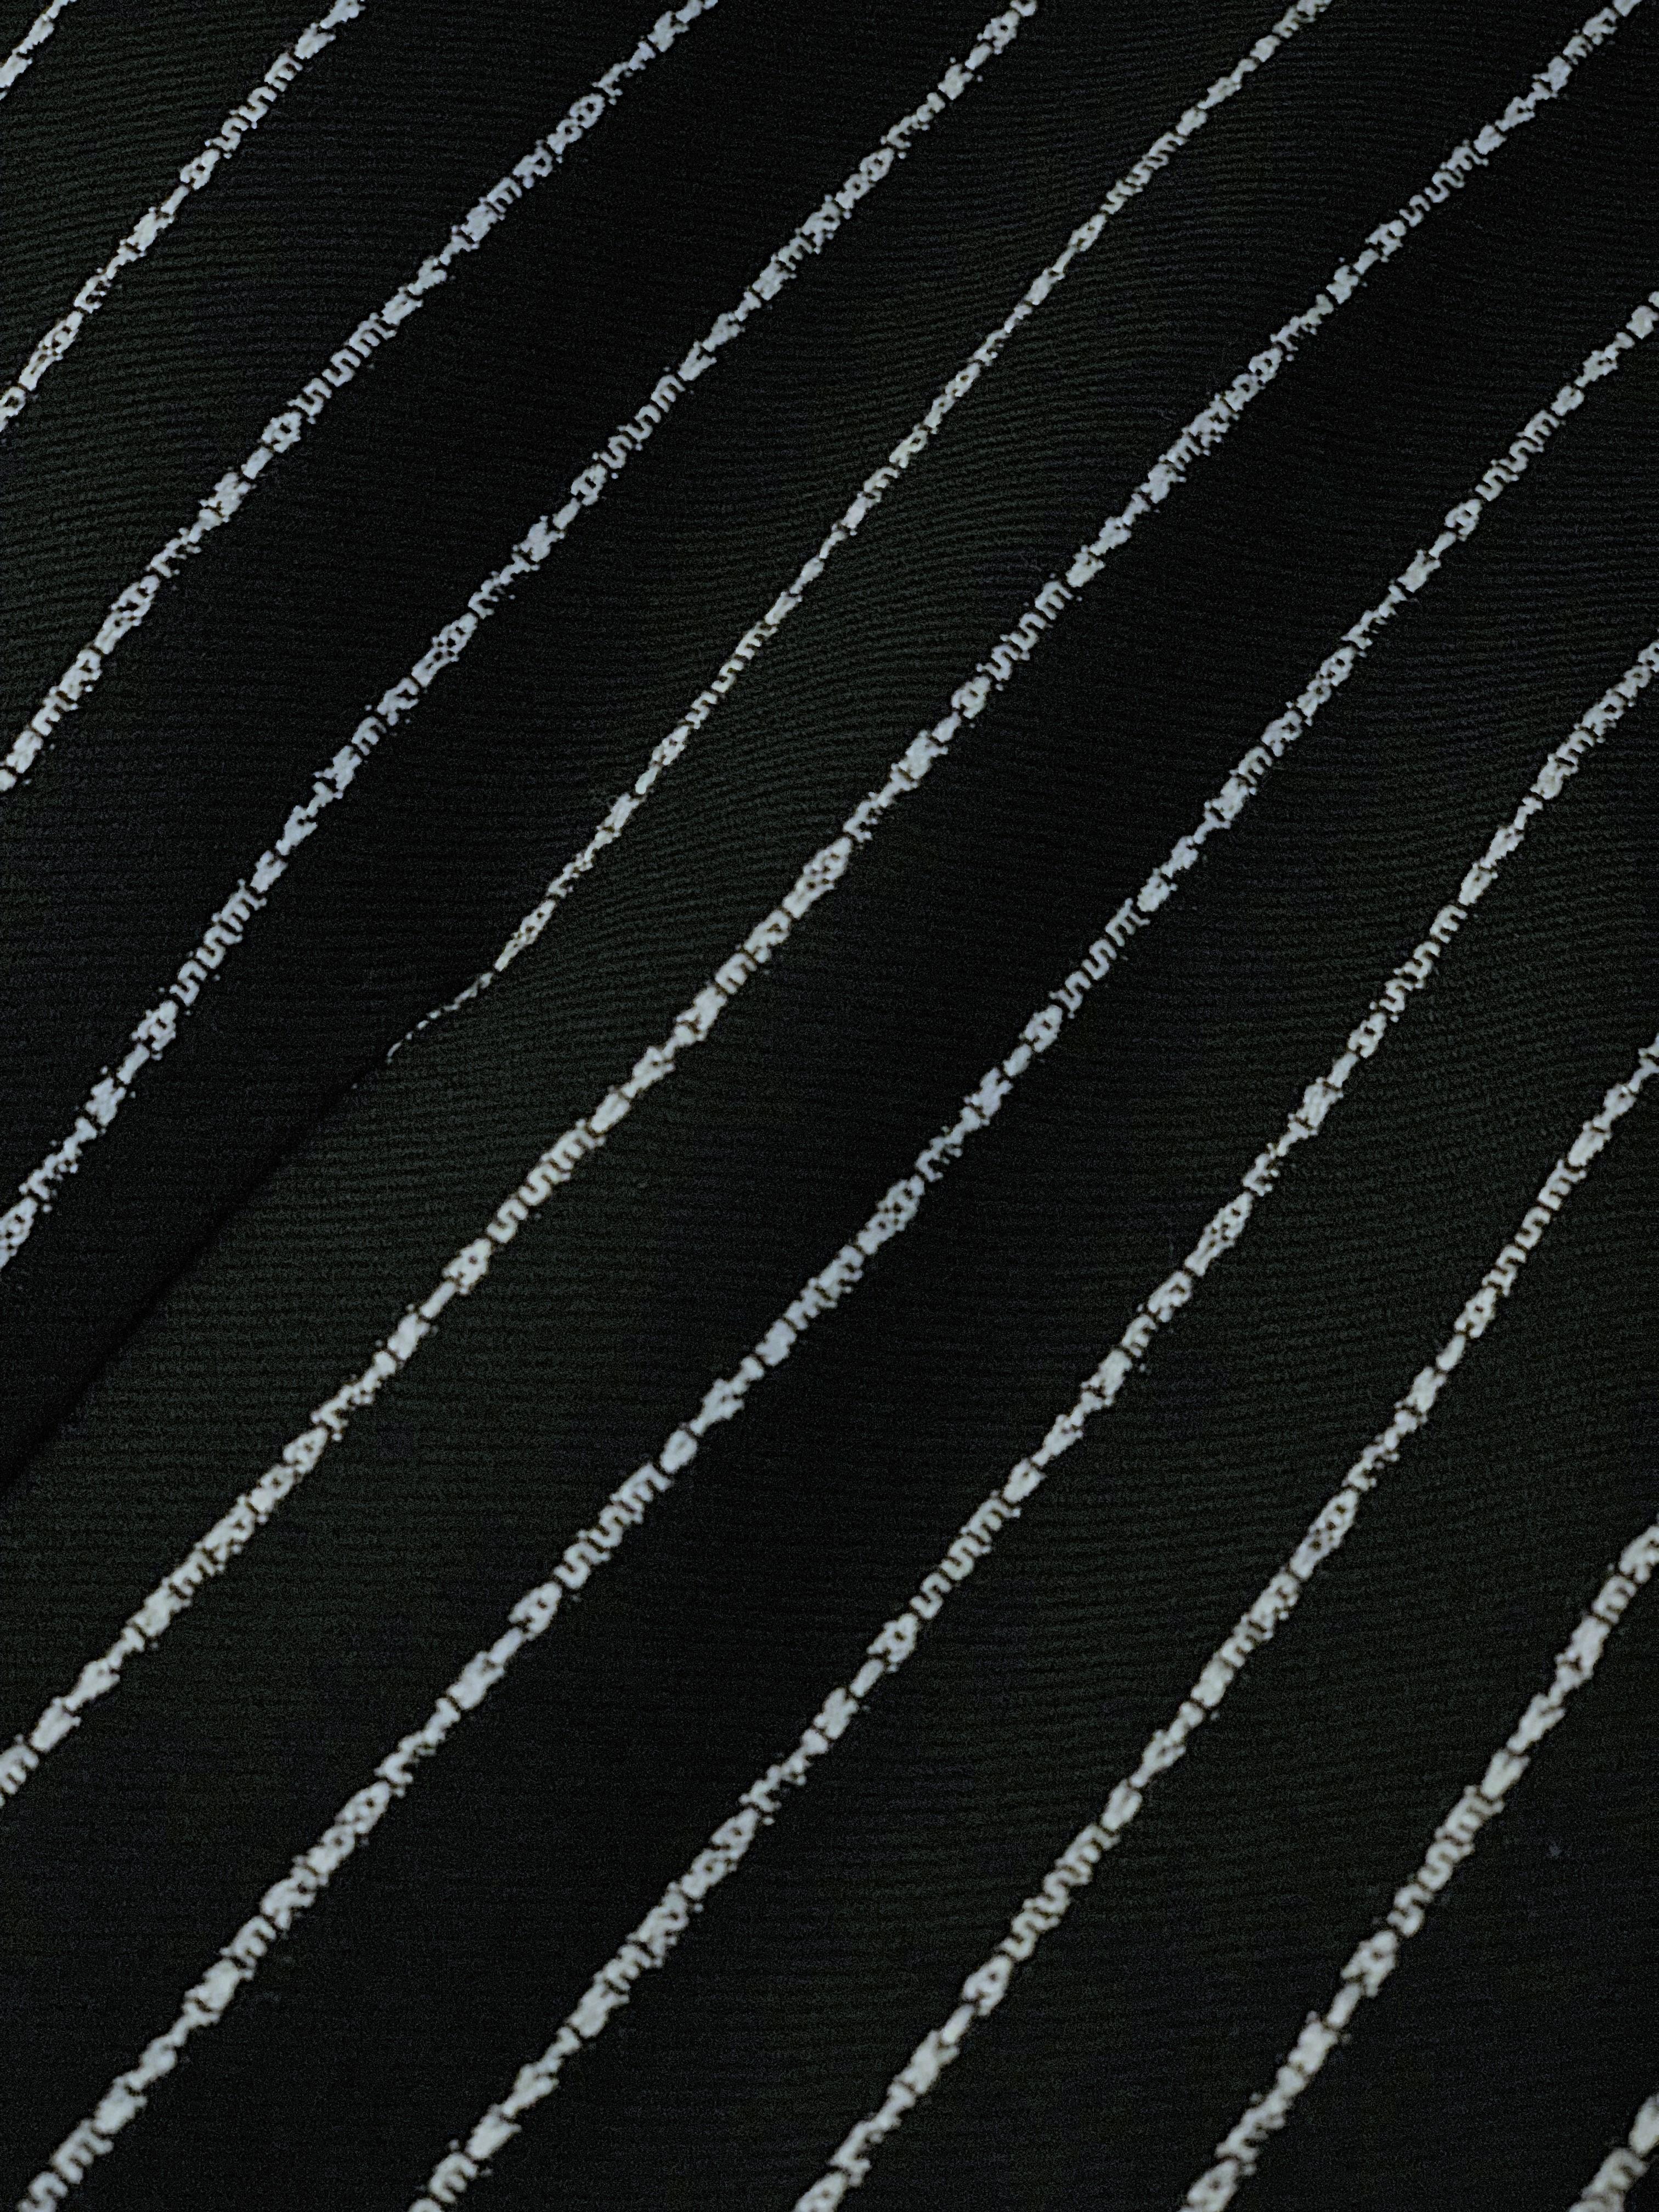 New Tom Ford For Yves Saint Laurent YSL Pinstripe Pantsuit Suit FR40 4